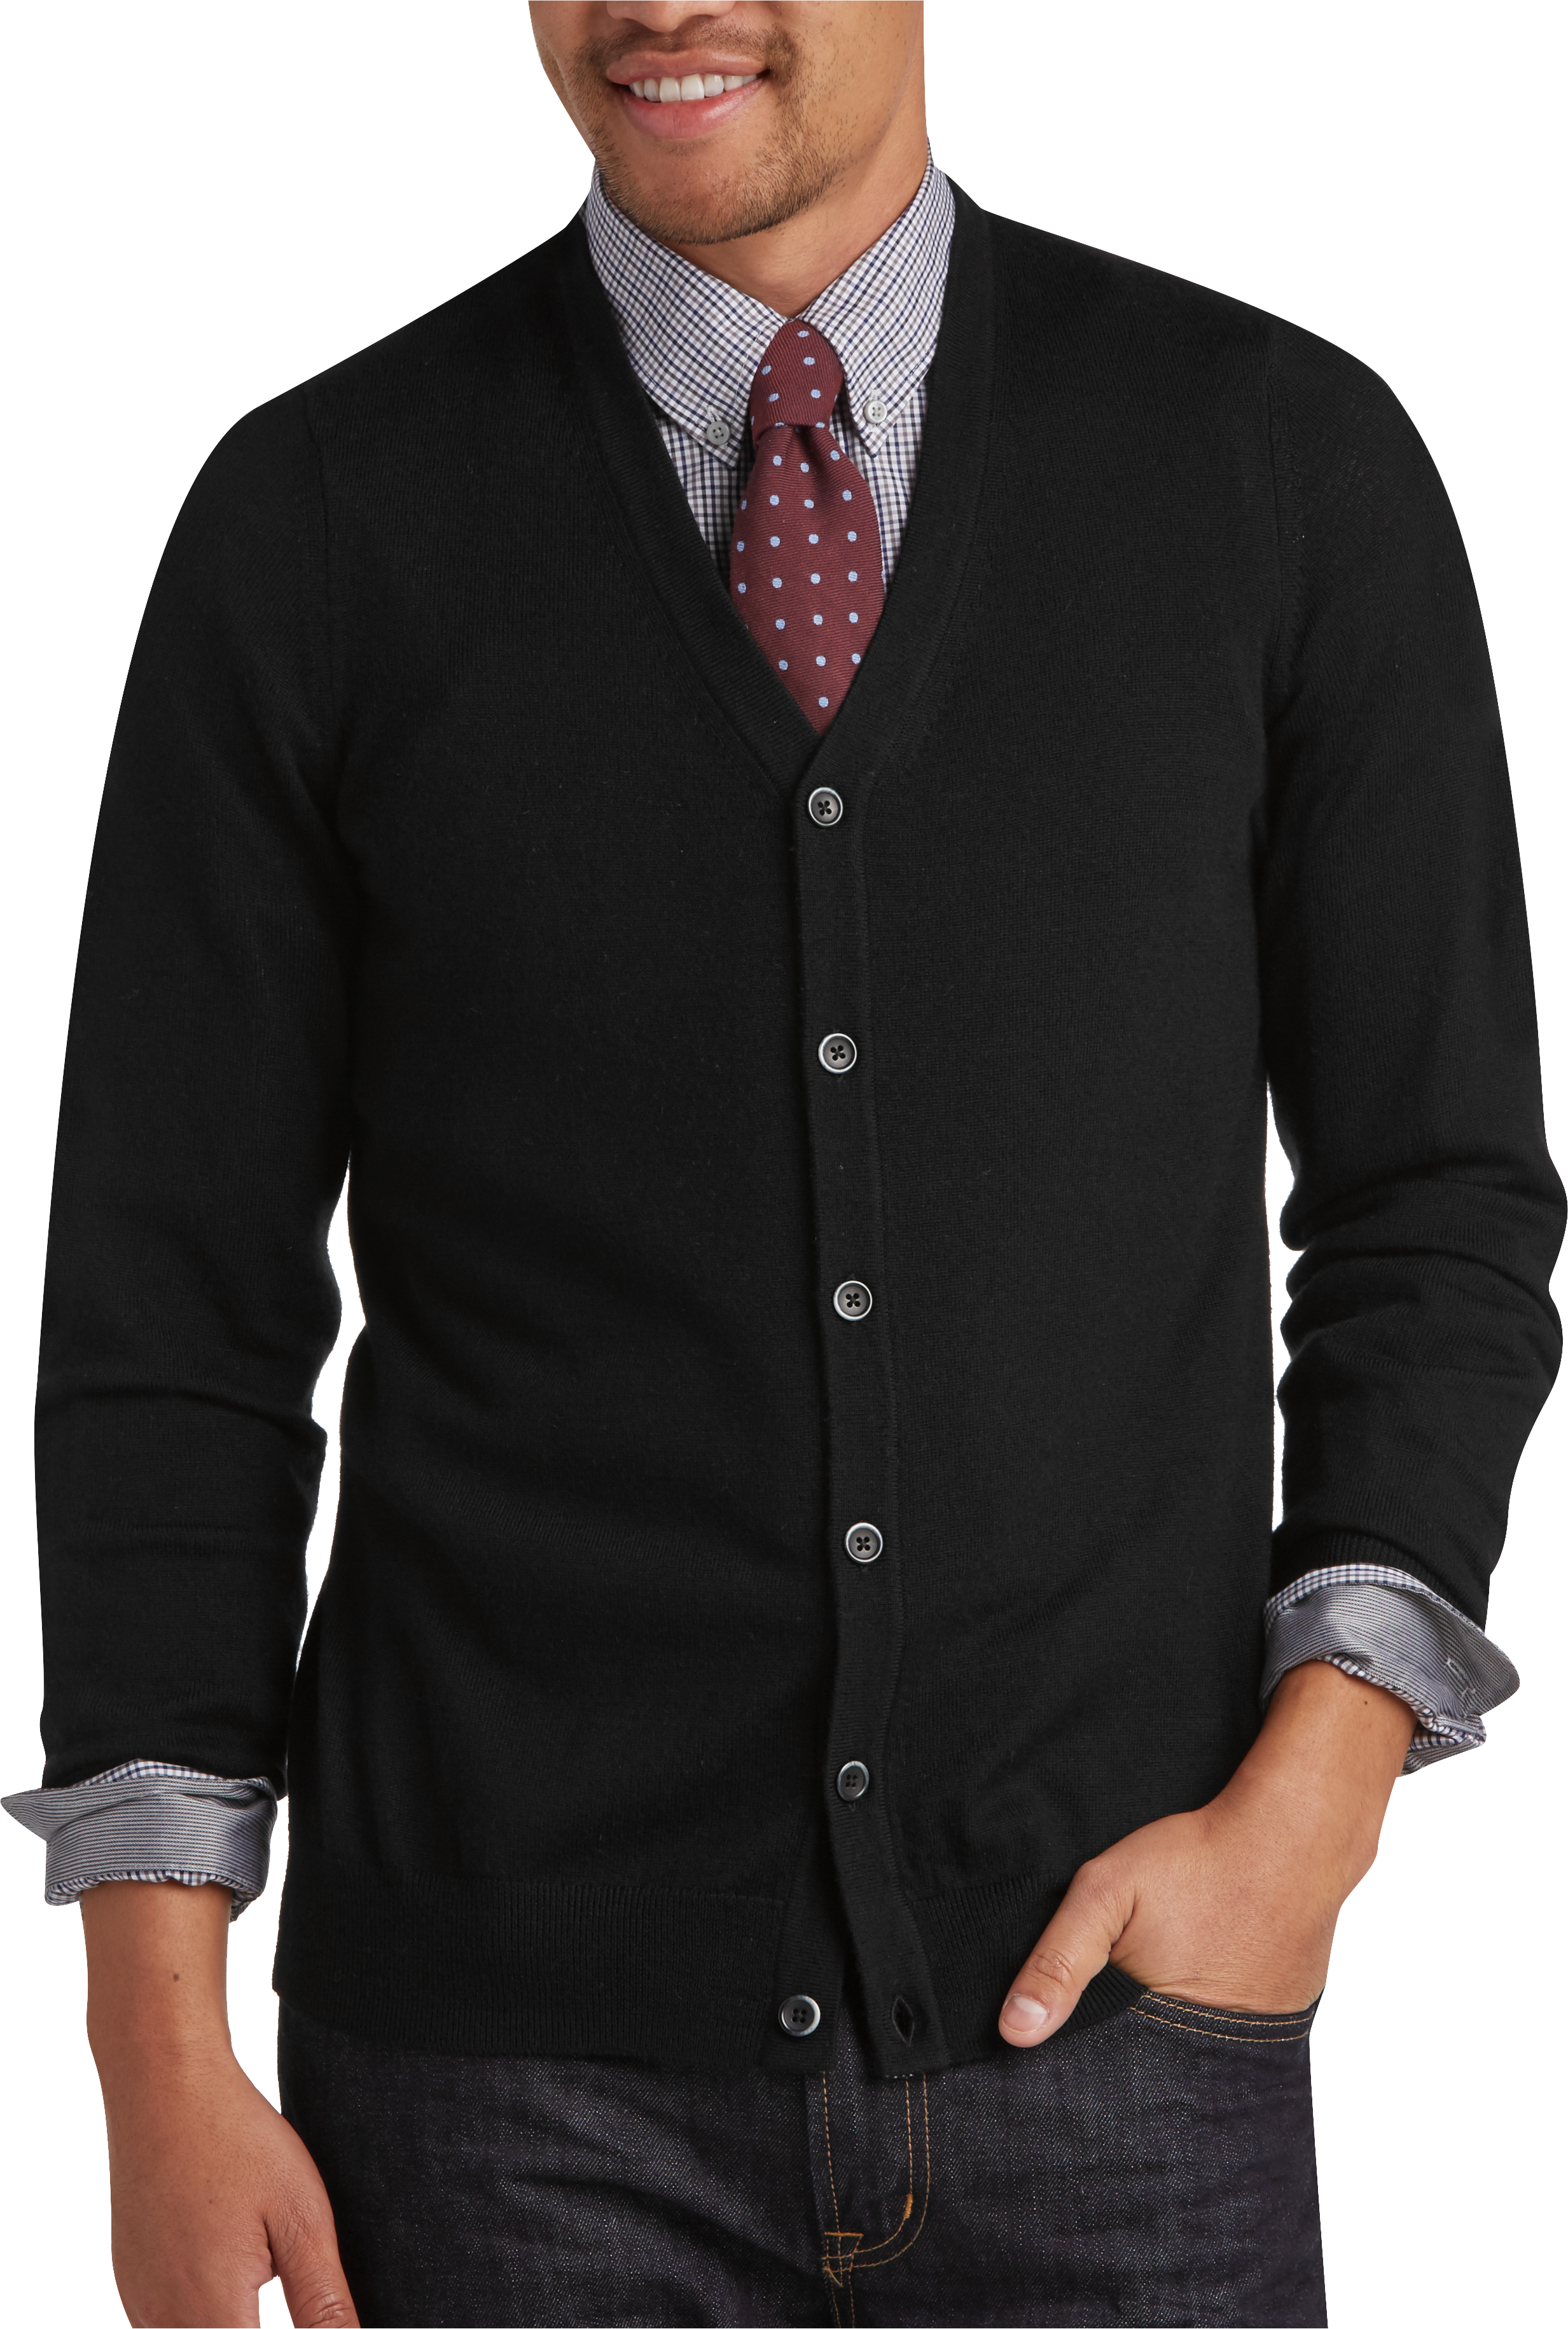 Joseph Abboud Black Merino Cardigan Sweater - Men's Sale | Men's Wearhouse